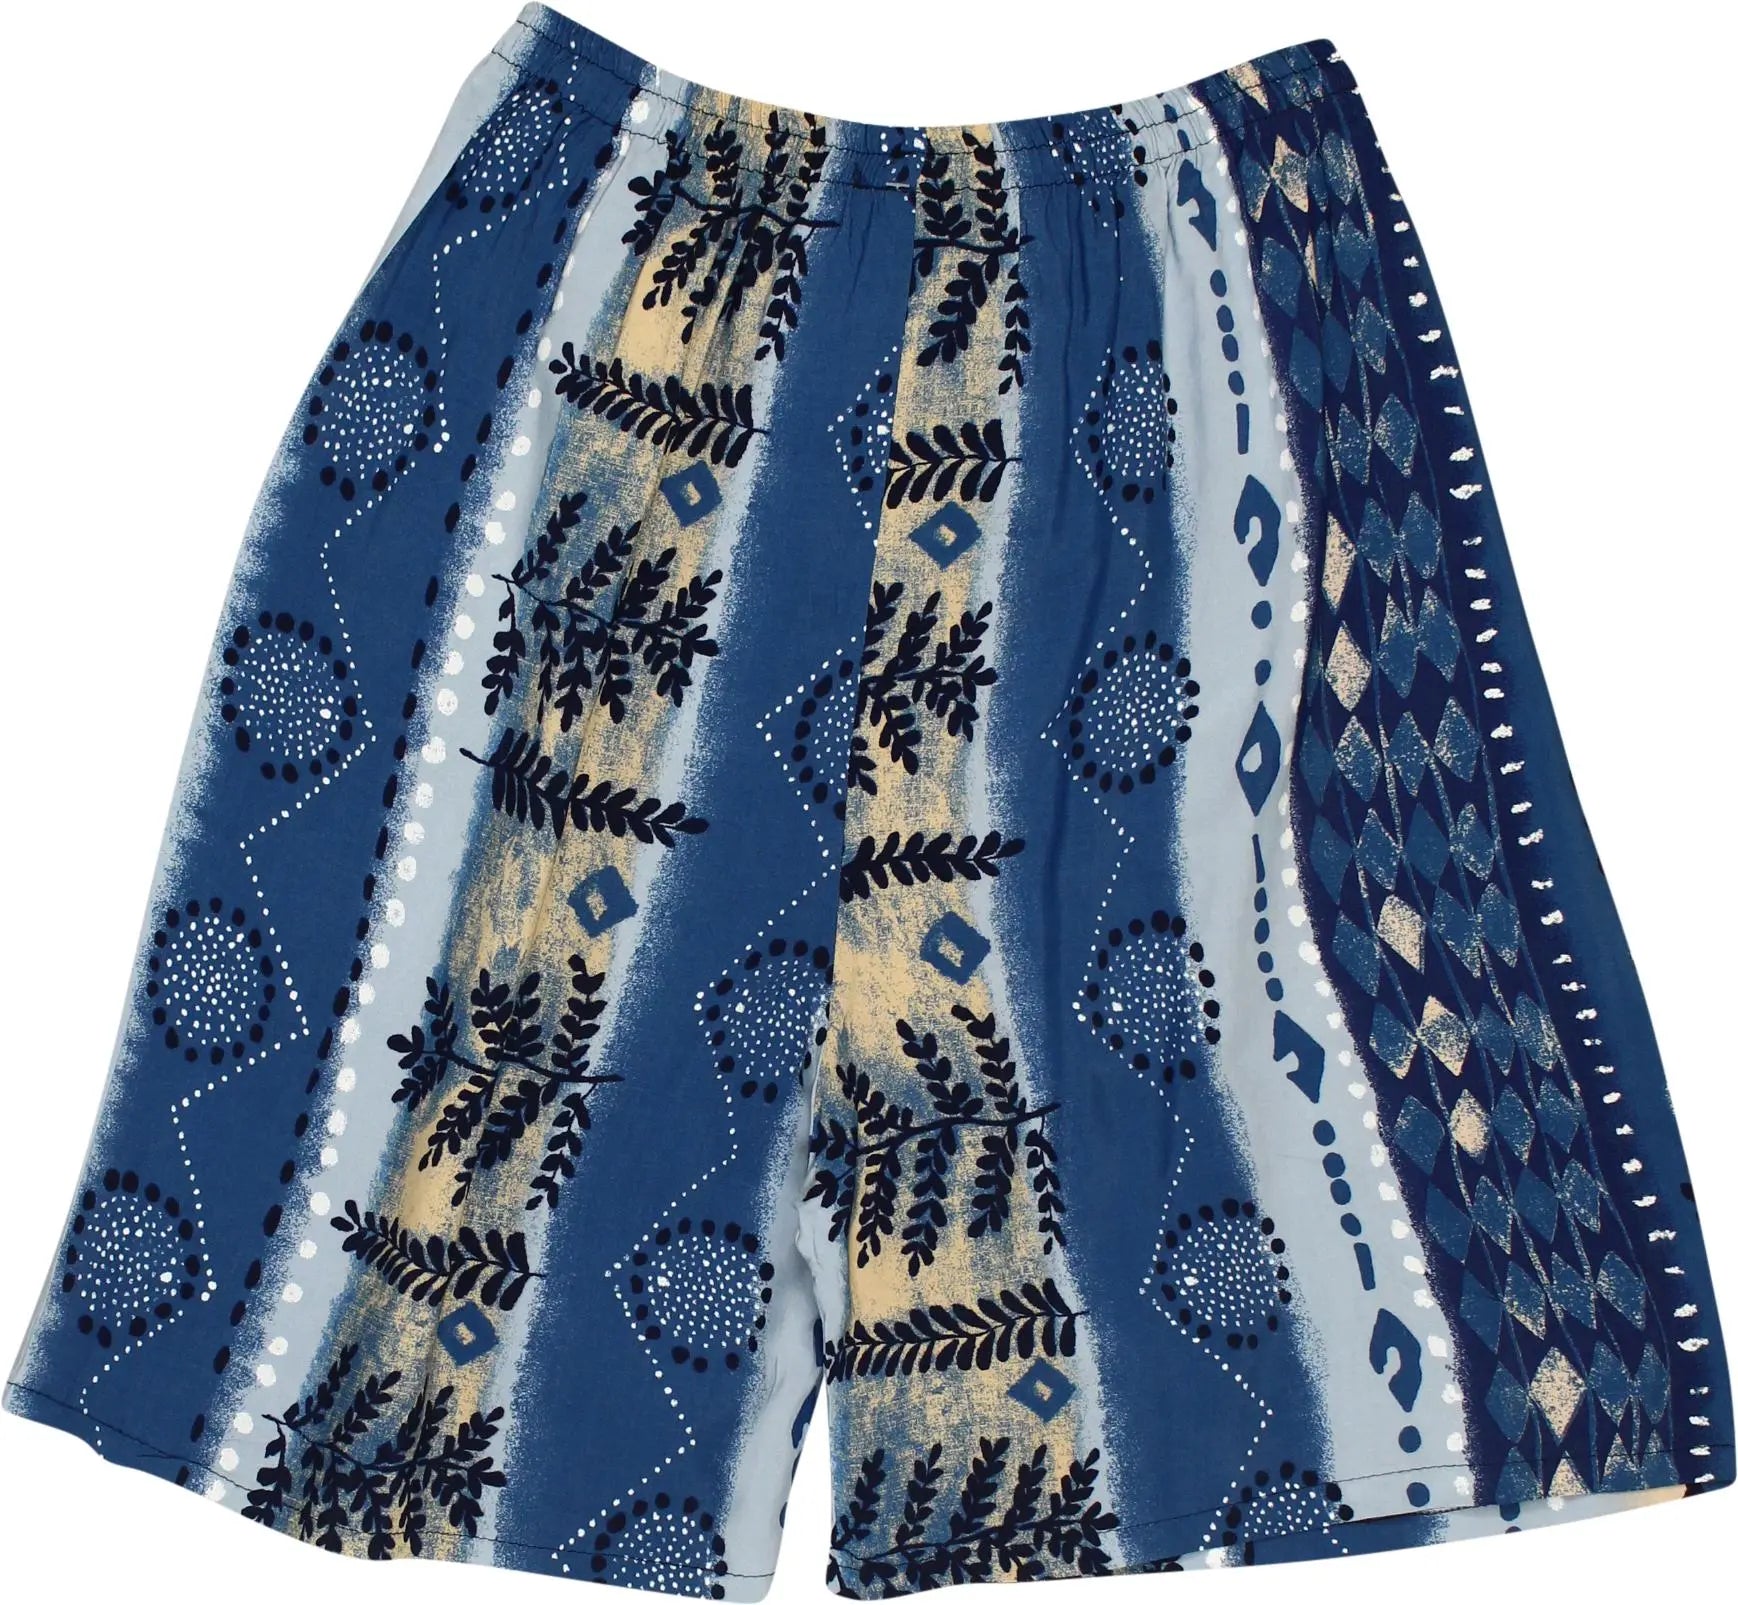 Lanaya - Patterned Drawstring Shorts- ThriftTale.com - Vintage and second handclothing